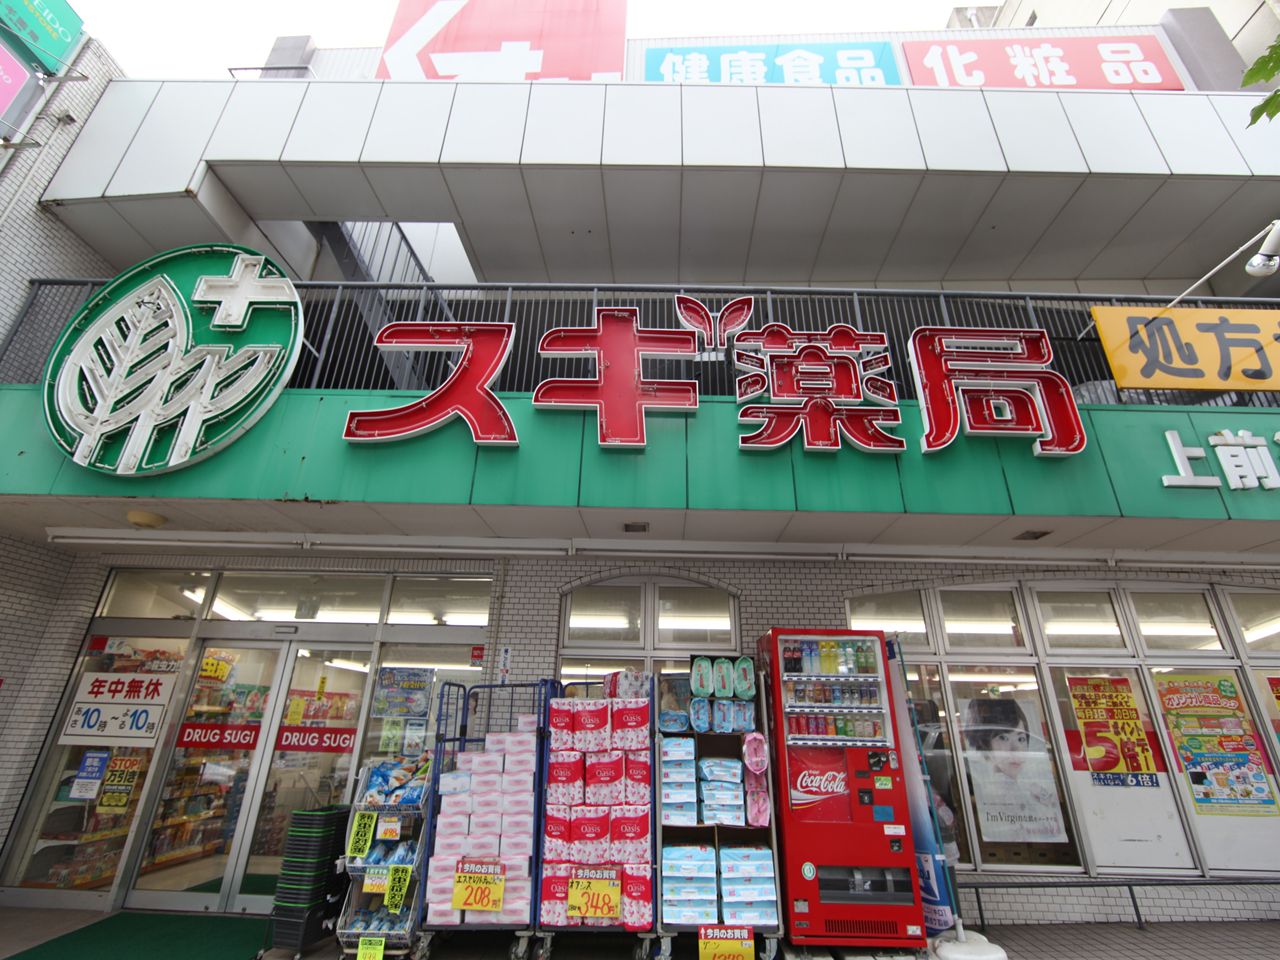 Dorakkusutoa. Cedar pharmacy Kamimaezu shop 383m until (drugstore)